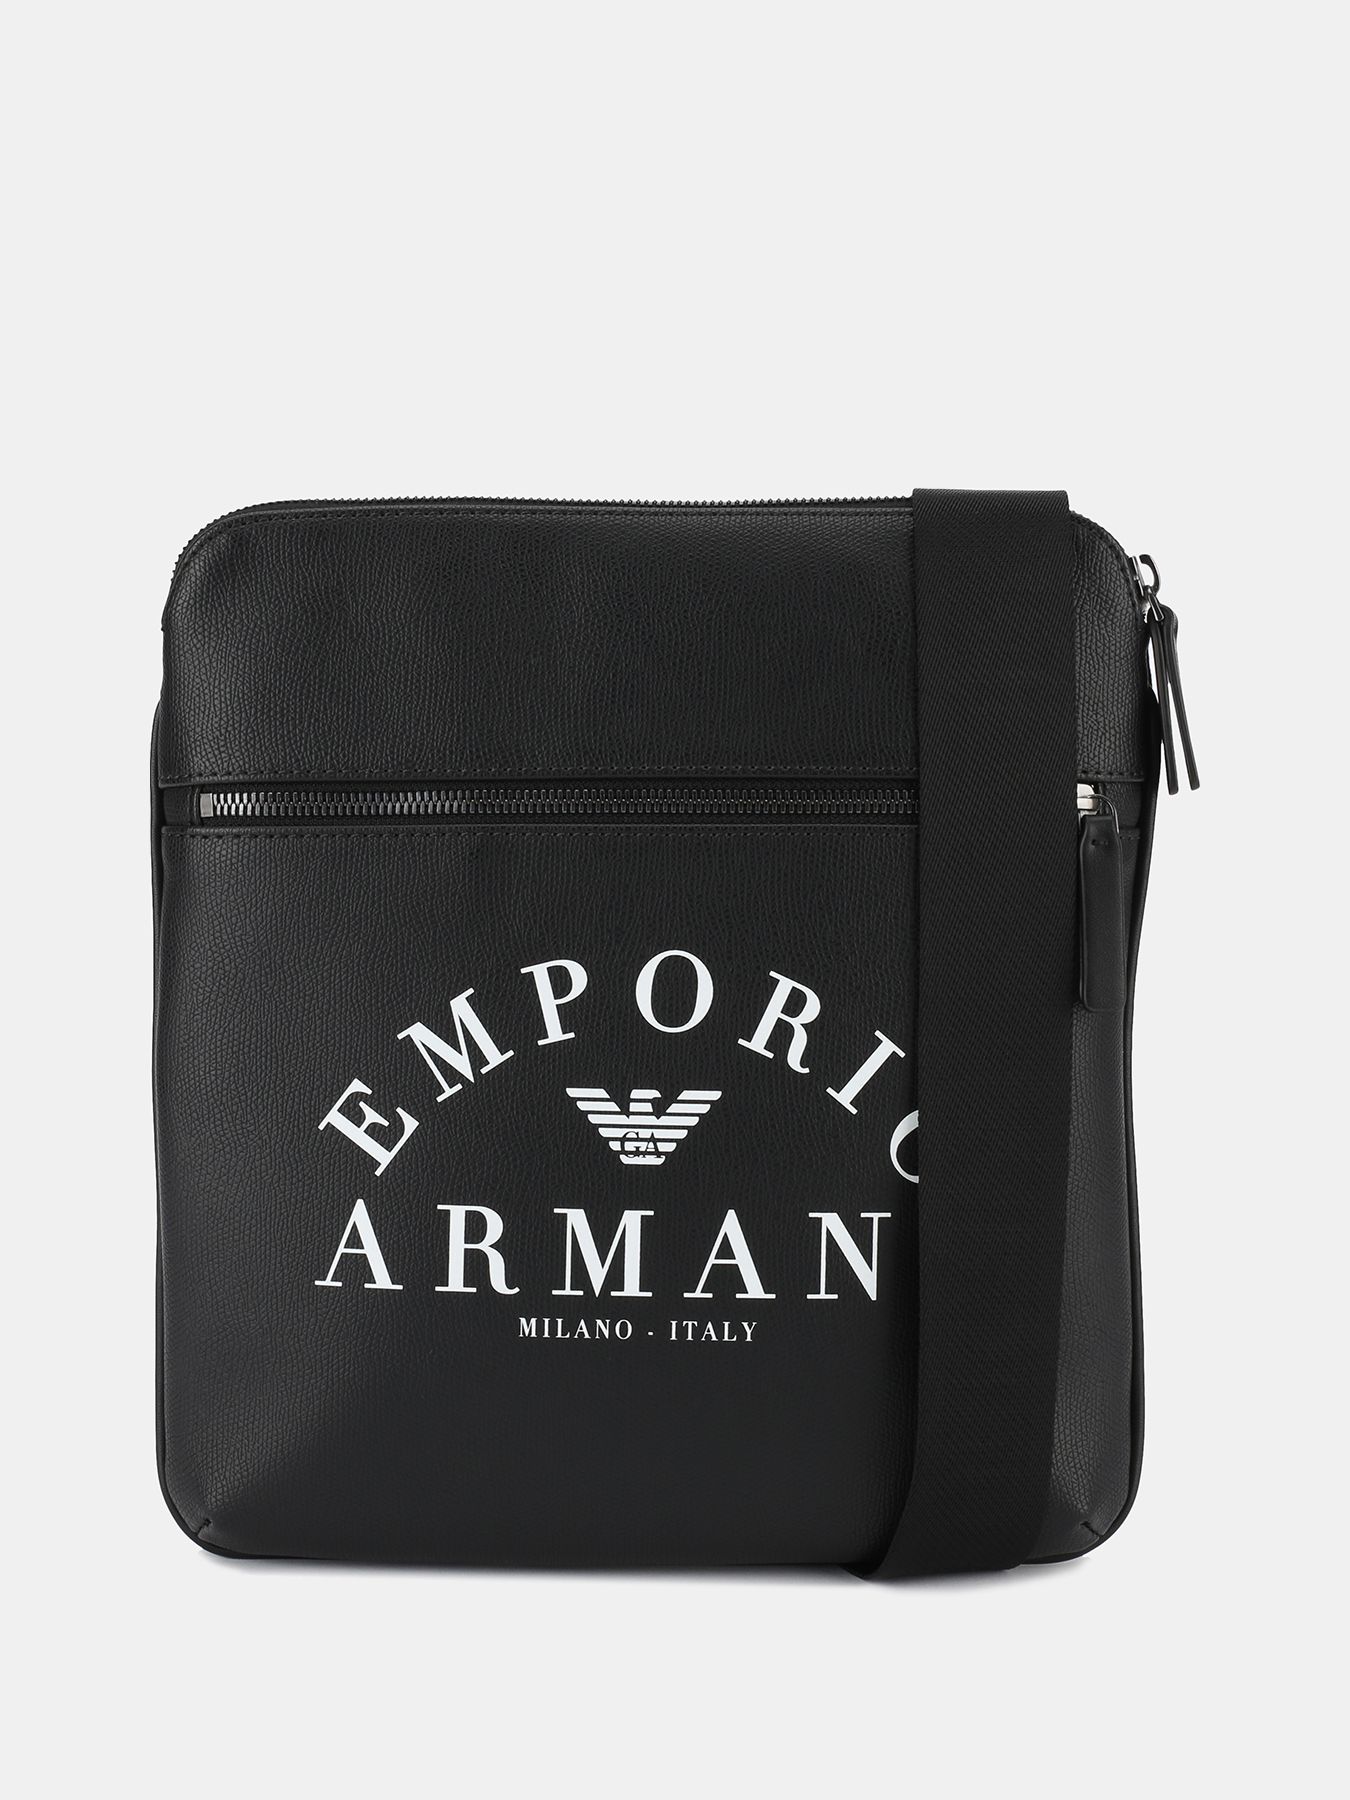 Мужская сумка armani. Сумка через плечо Emporio Armani. Сумка Emporio Armani мужская через плечо. Эмпоиио Арма сумка мужская. Емпорио Армани мужская сумка через плечо.